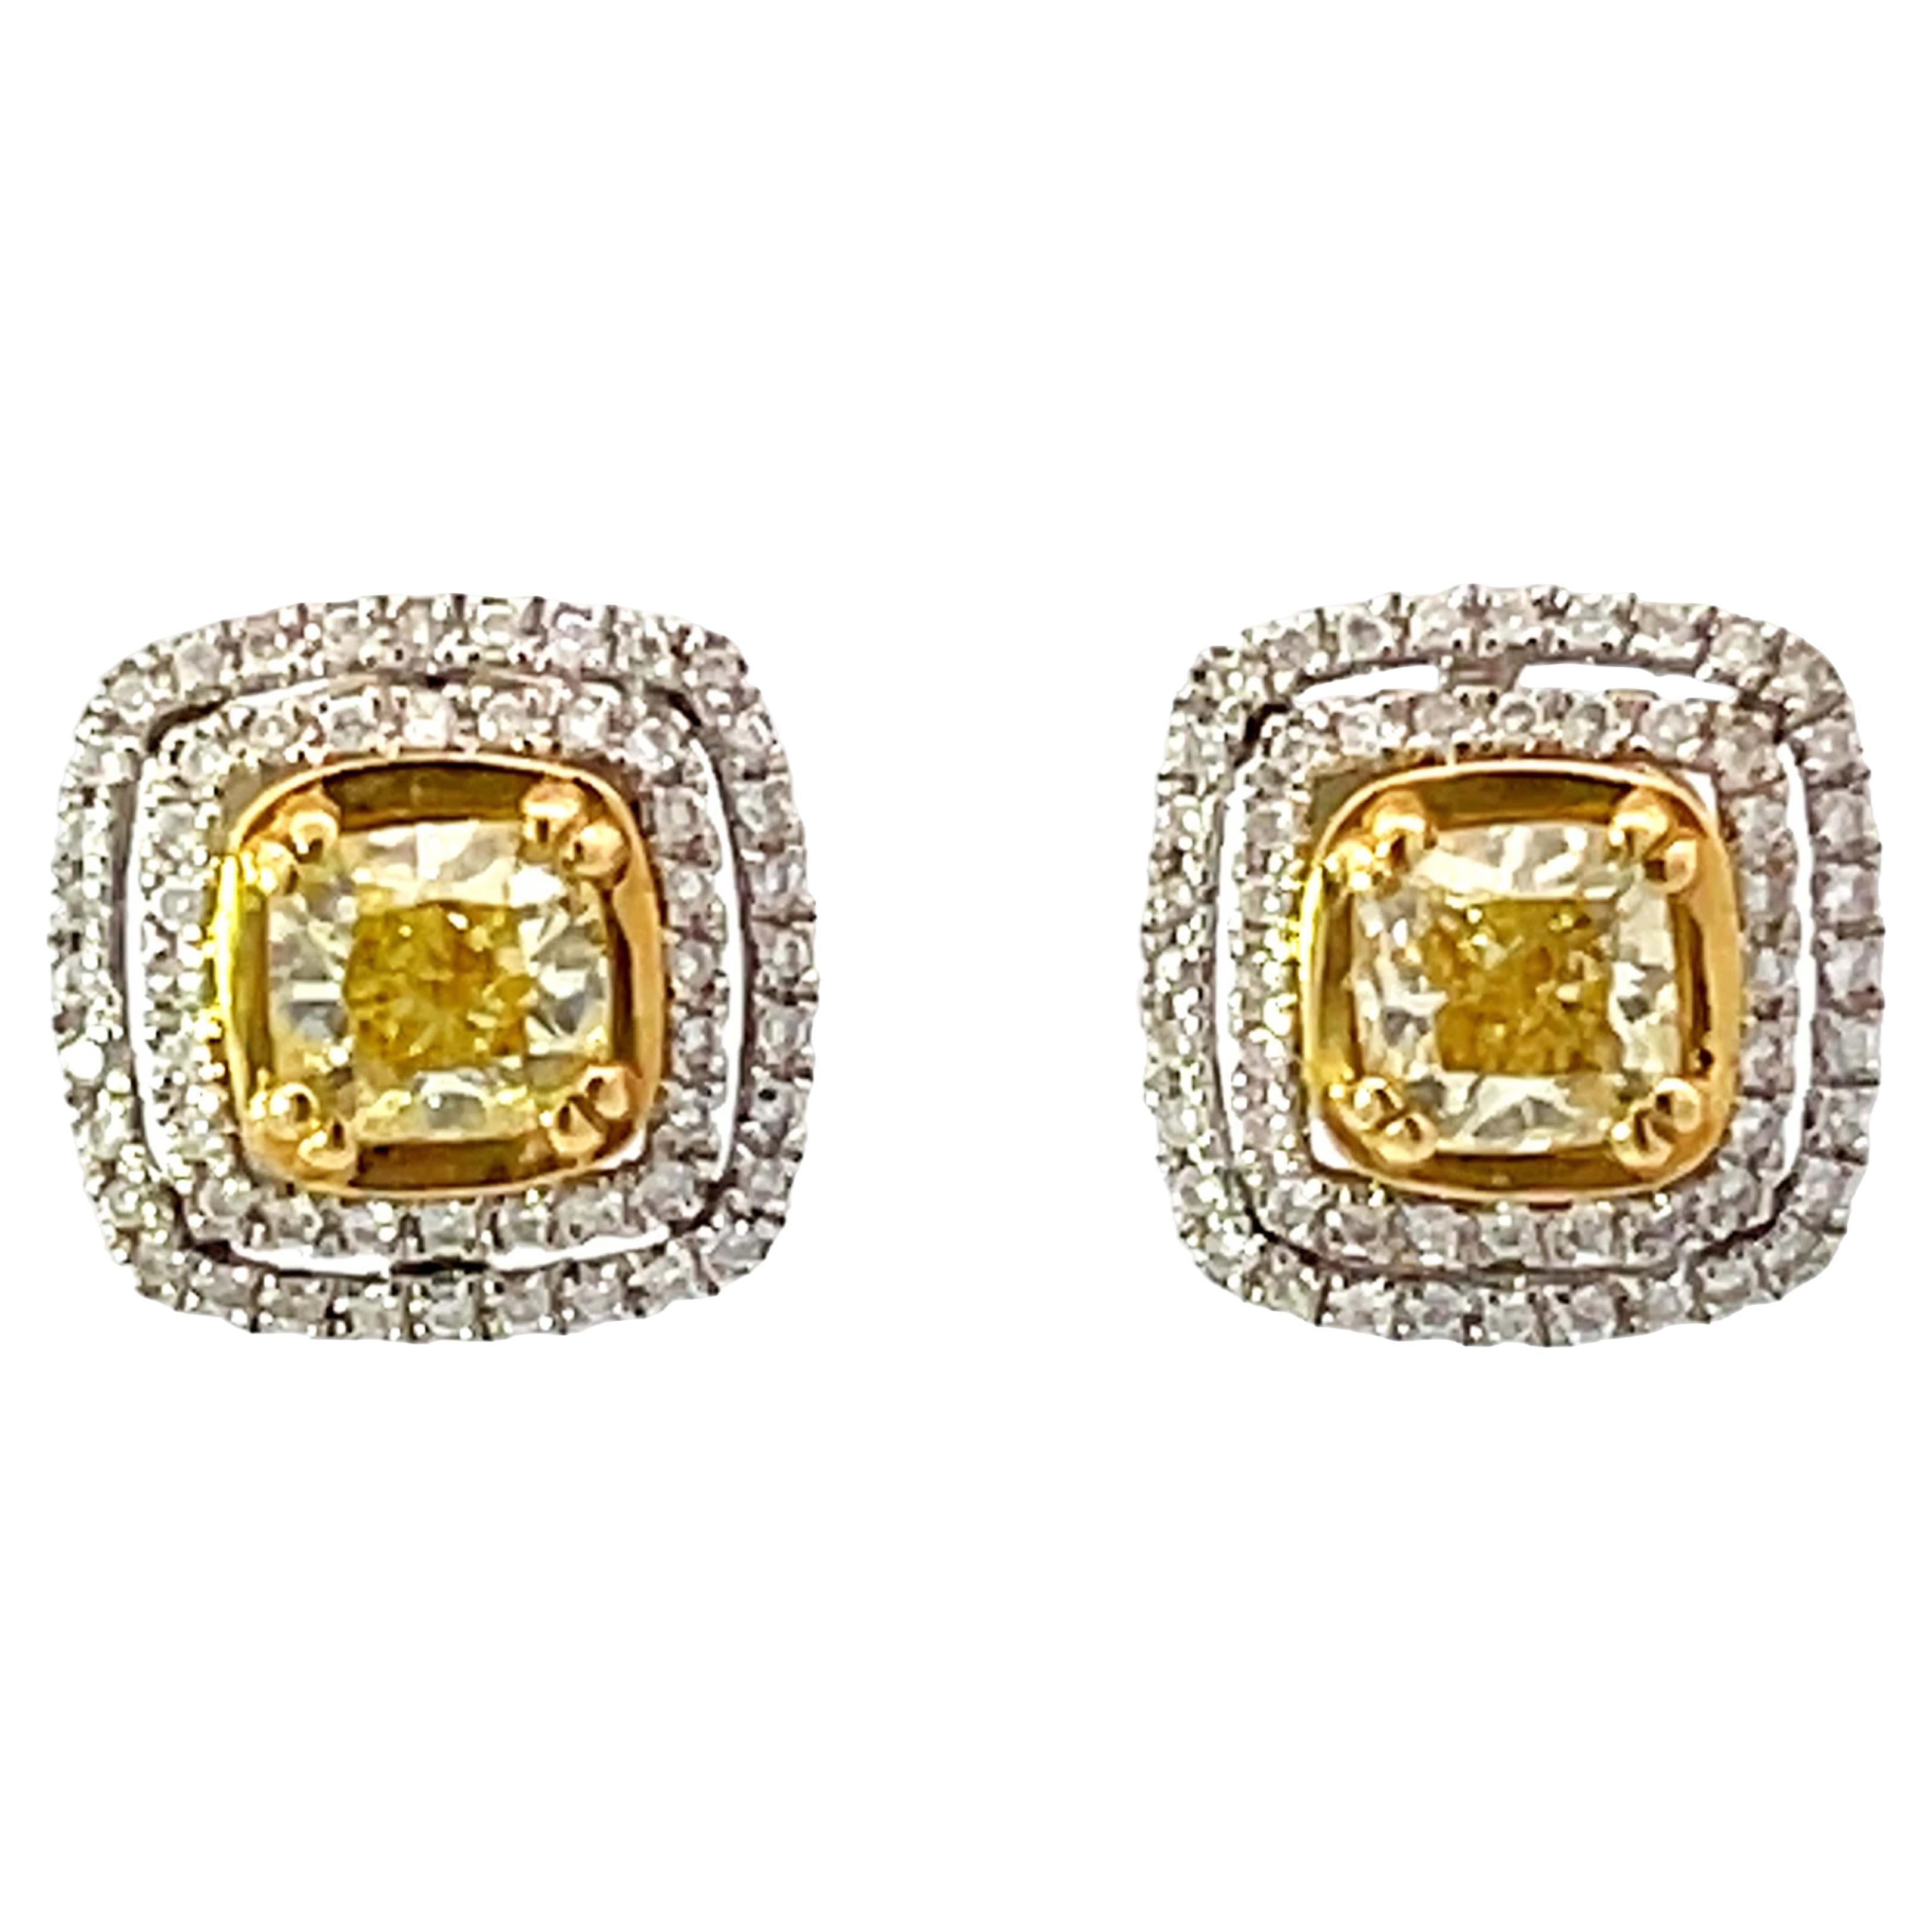 Fancy Yellow Cushion Cut Diamond Earrings with Double Diamond Halo 18k Gold